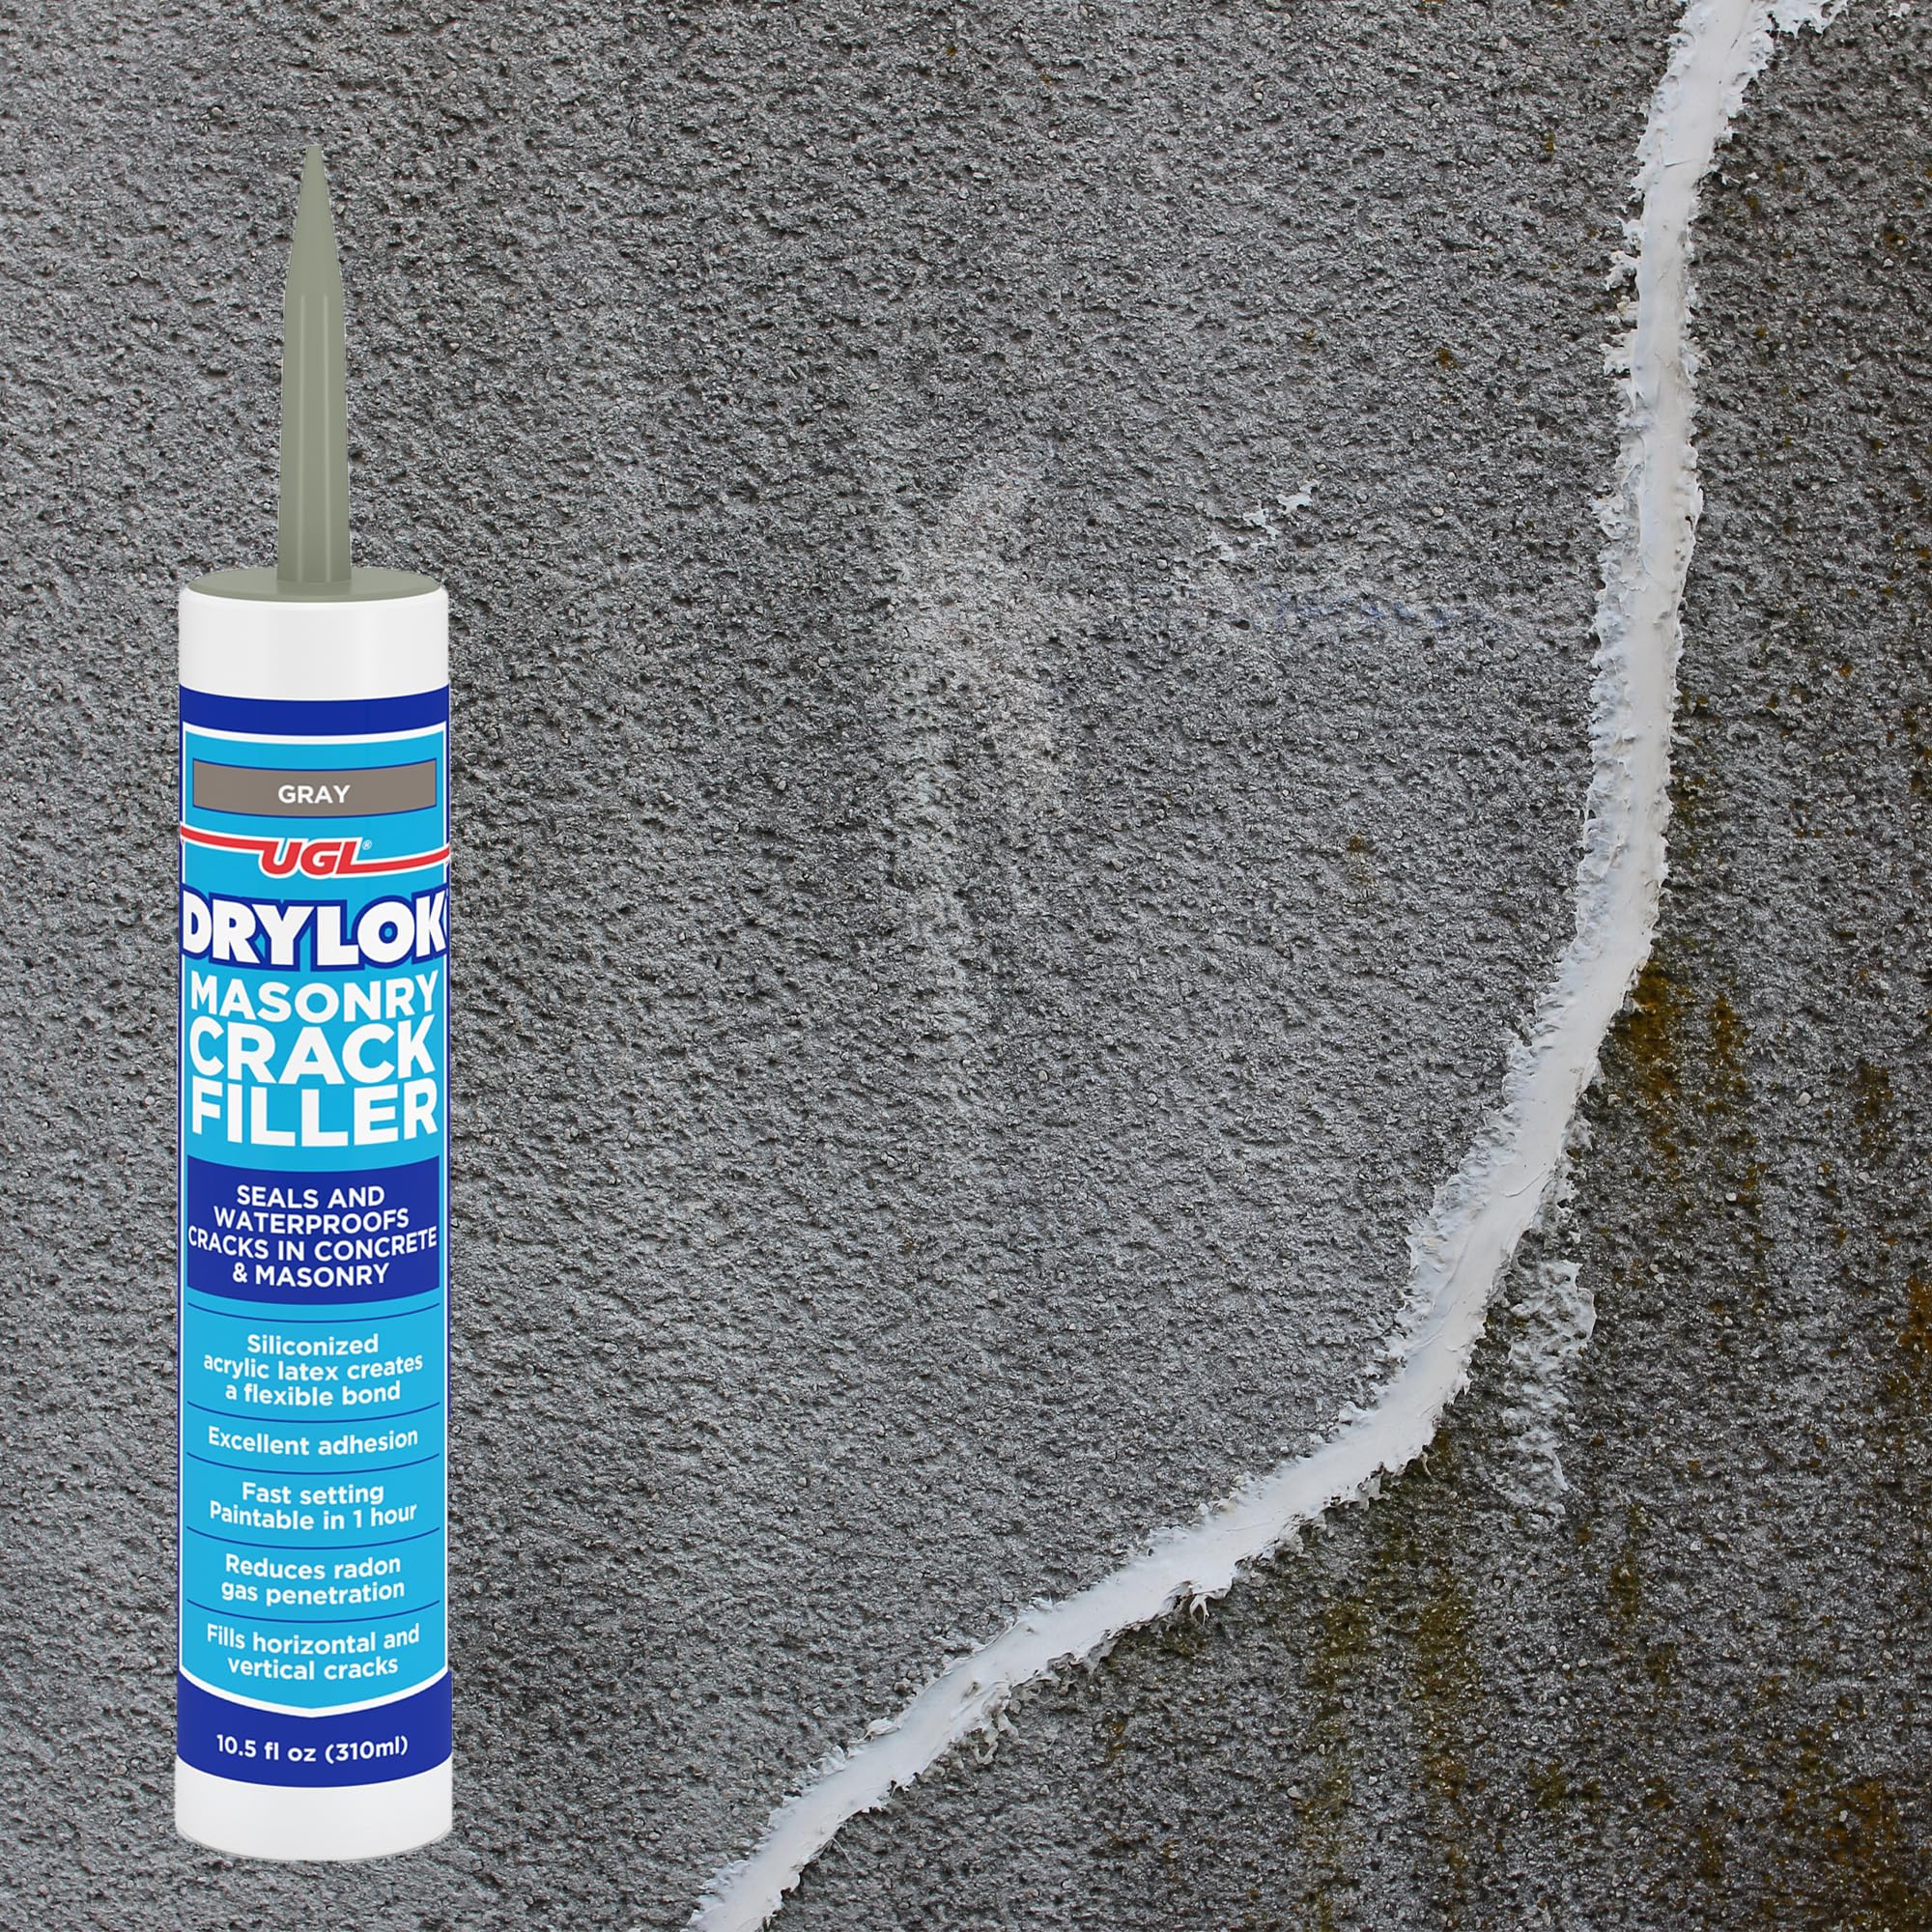 UGL - Drylok - Gray - Masonry Crack Filler Silicone Caulk - Seals and Waterproofs Cracks - Concrete & Masonry Adhesion - Indoor - Outdoor Latex Base - Sandy Texture, Paintable 10.5 fl. oz